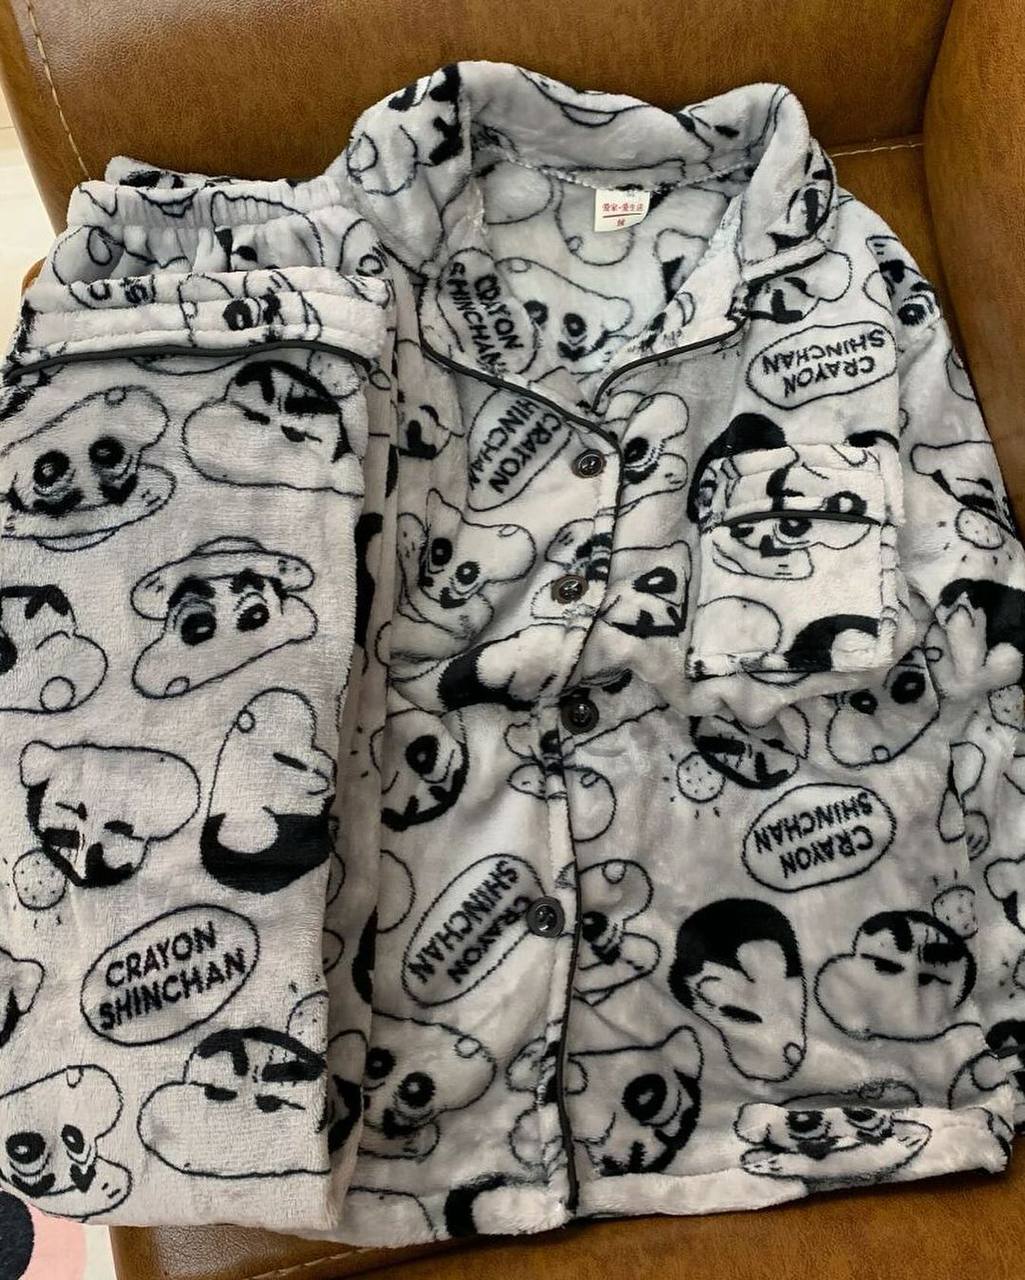 Crayon Shin Assorted Pajama Set